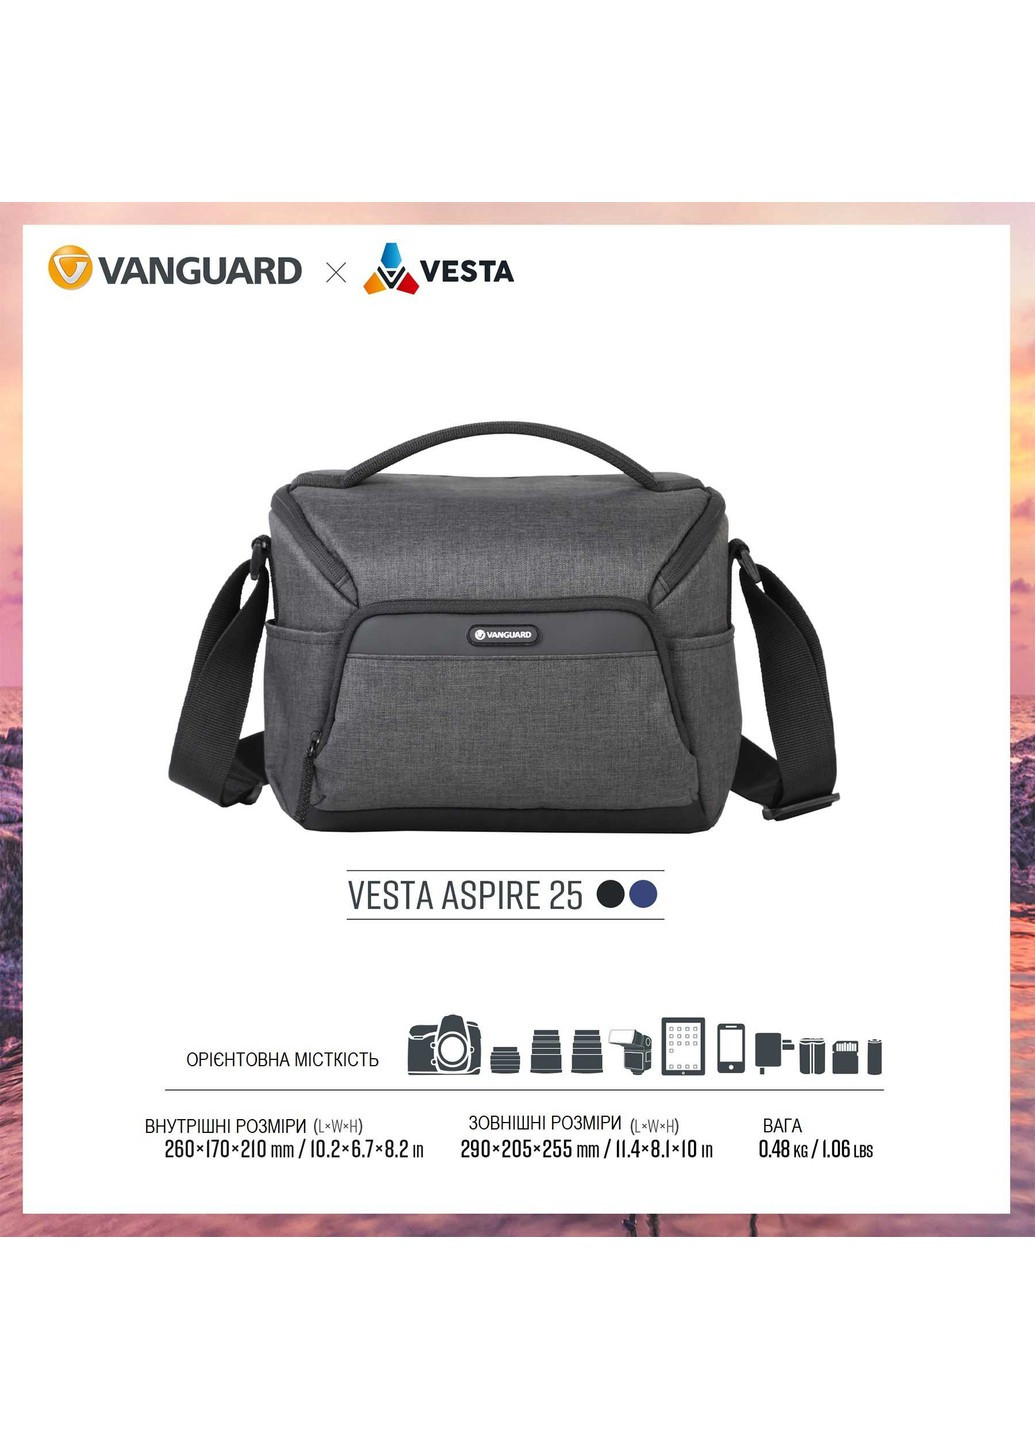 Сумка Vesta Aspire 25 Gray (Vesta Aspire 25 GY) Vanguard (252821612)